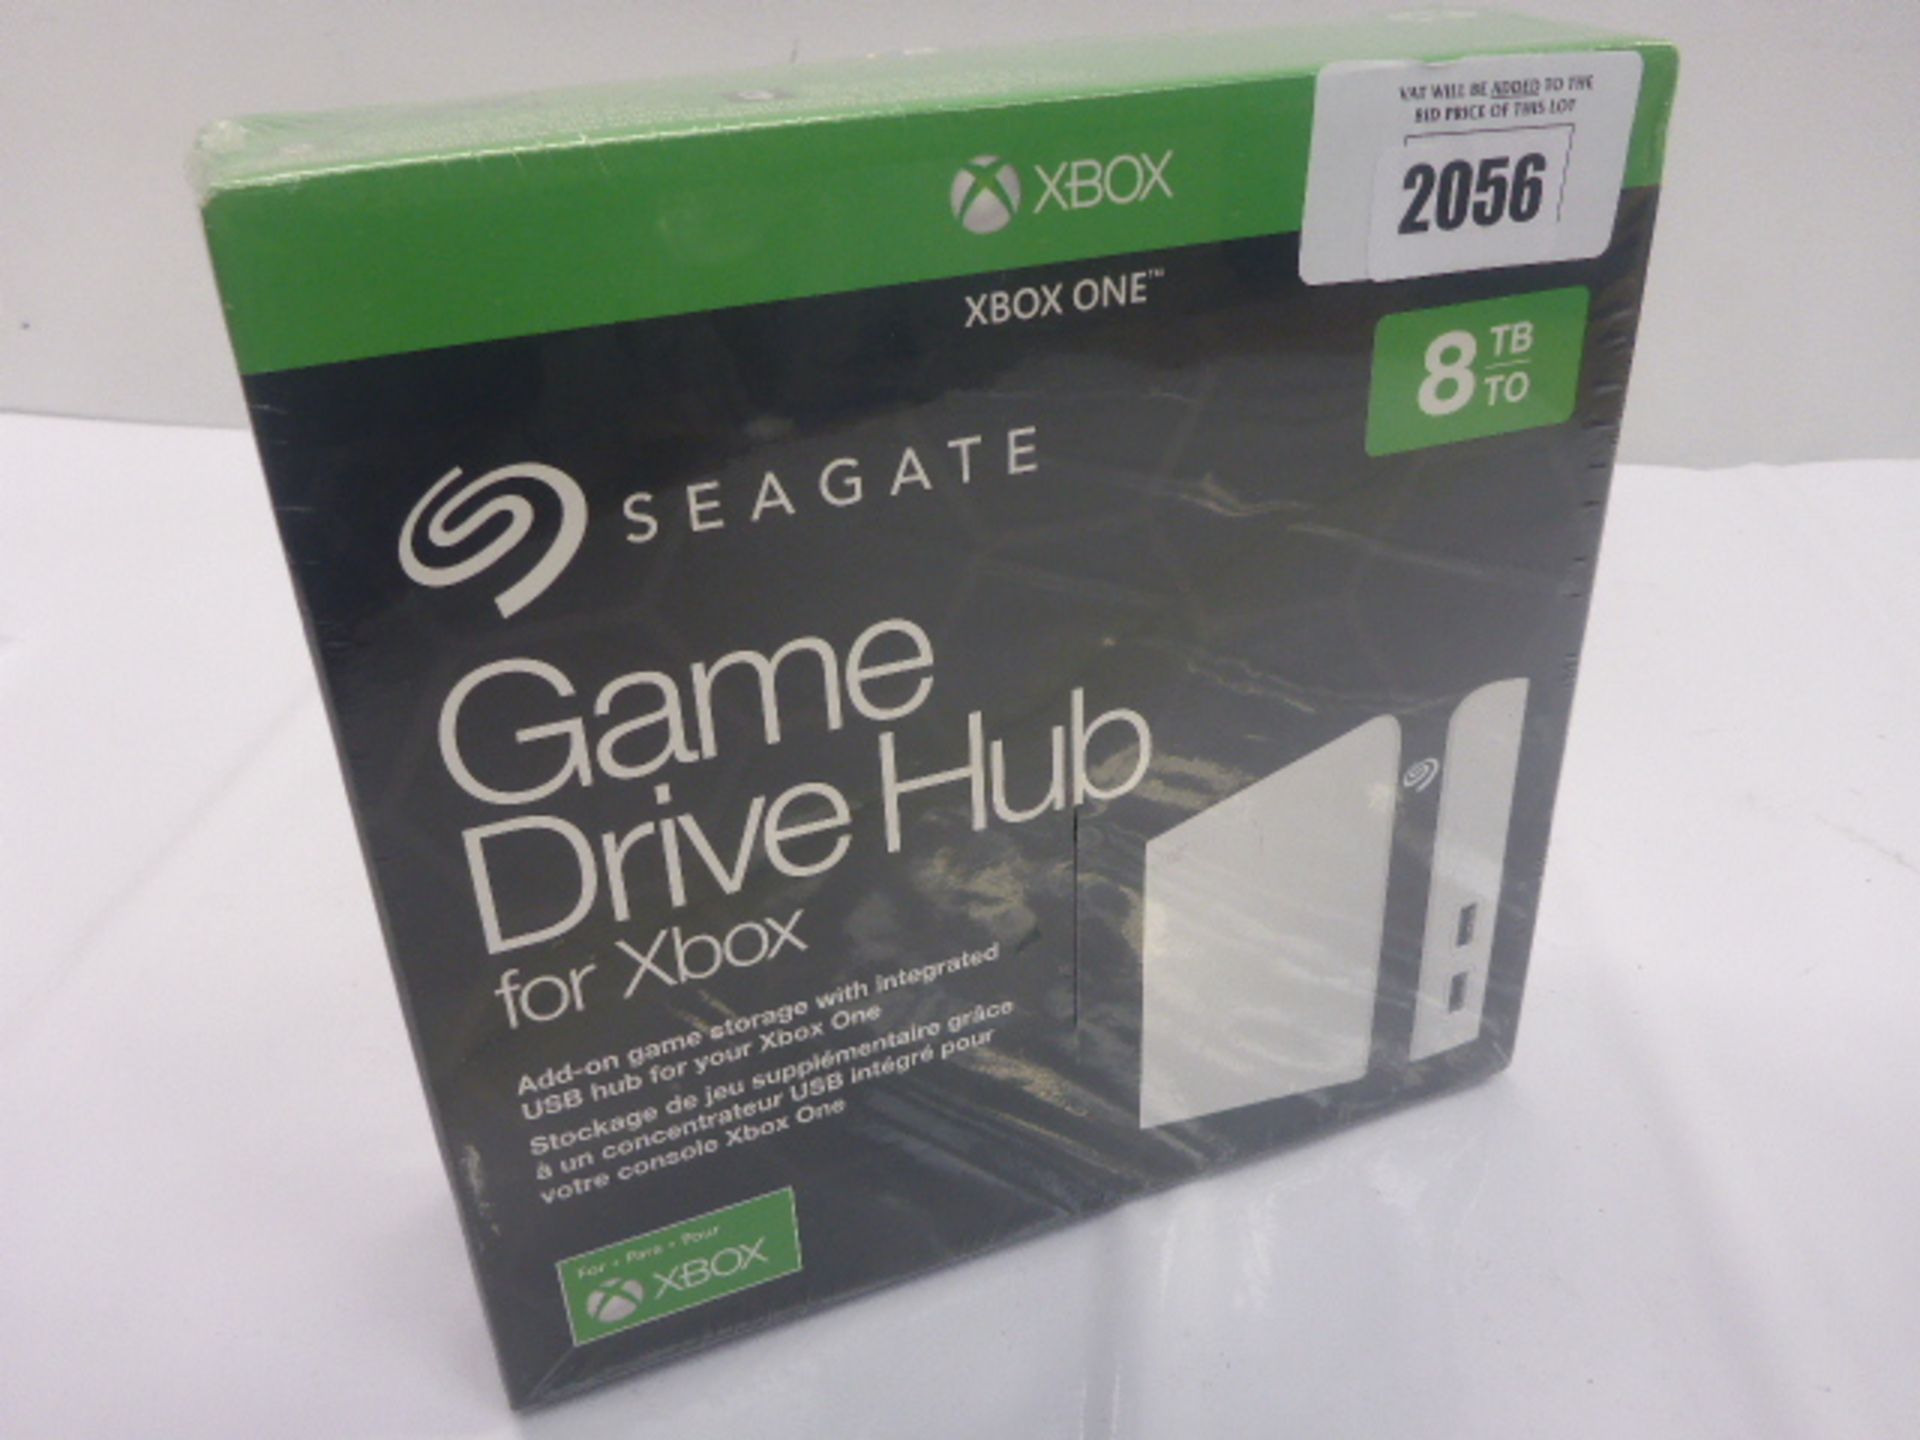 XBox Seagate 8 TB Game Drive HUB in sealed box.